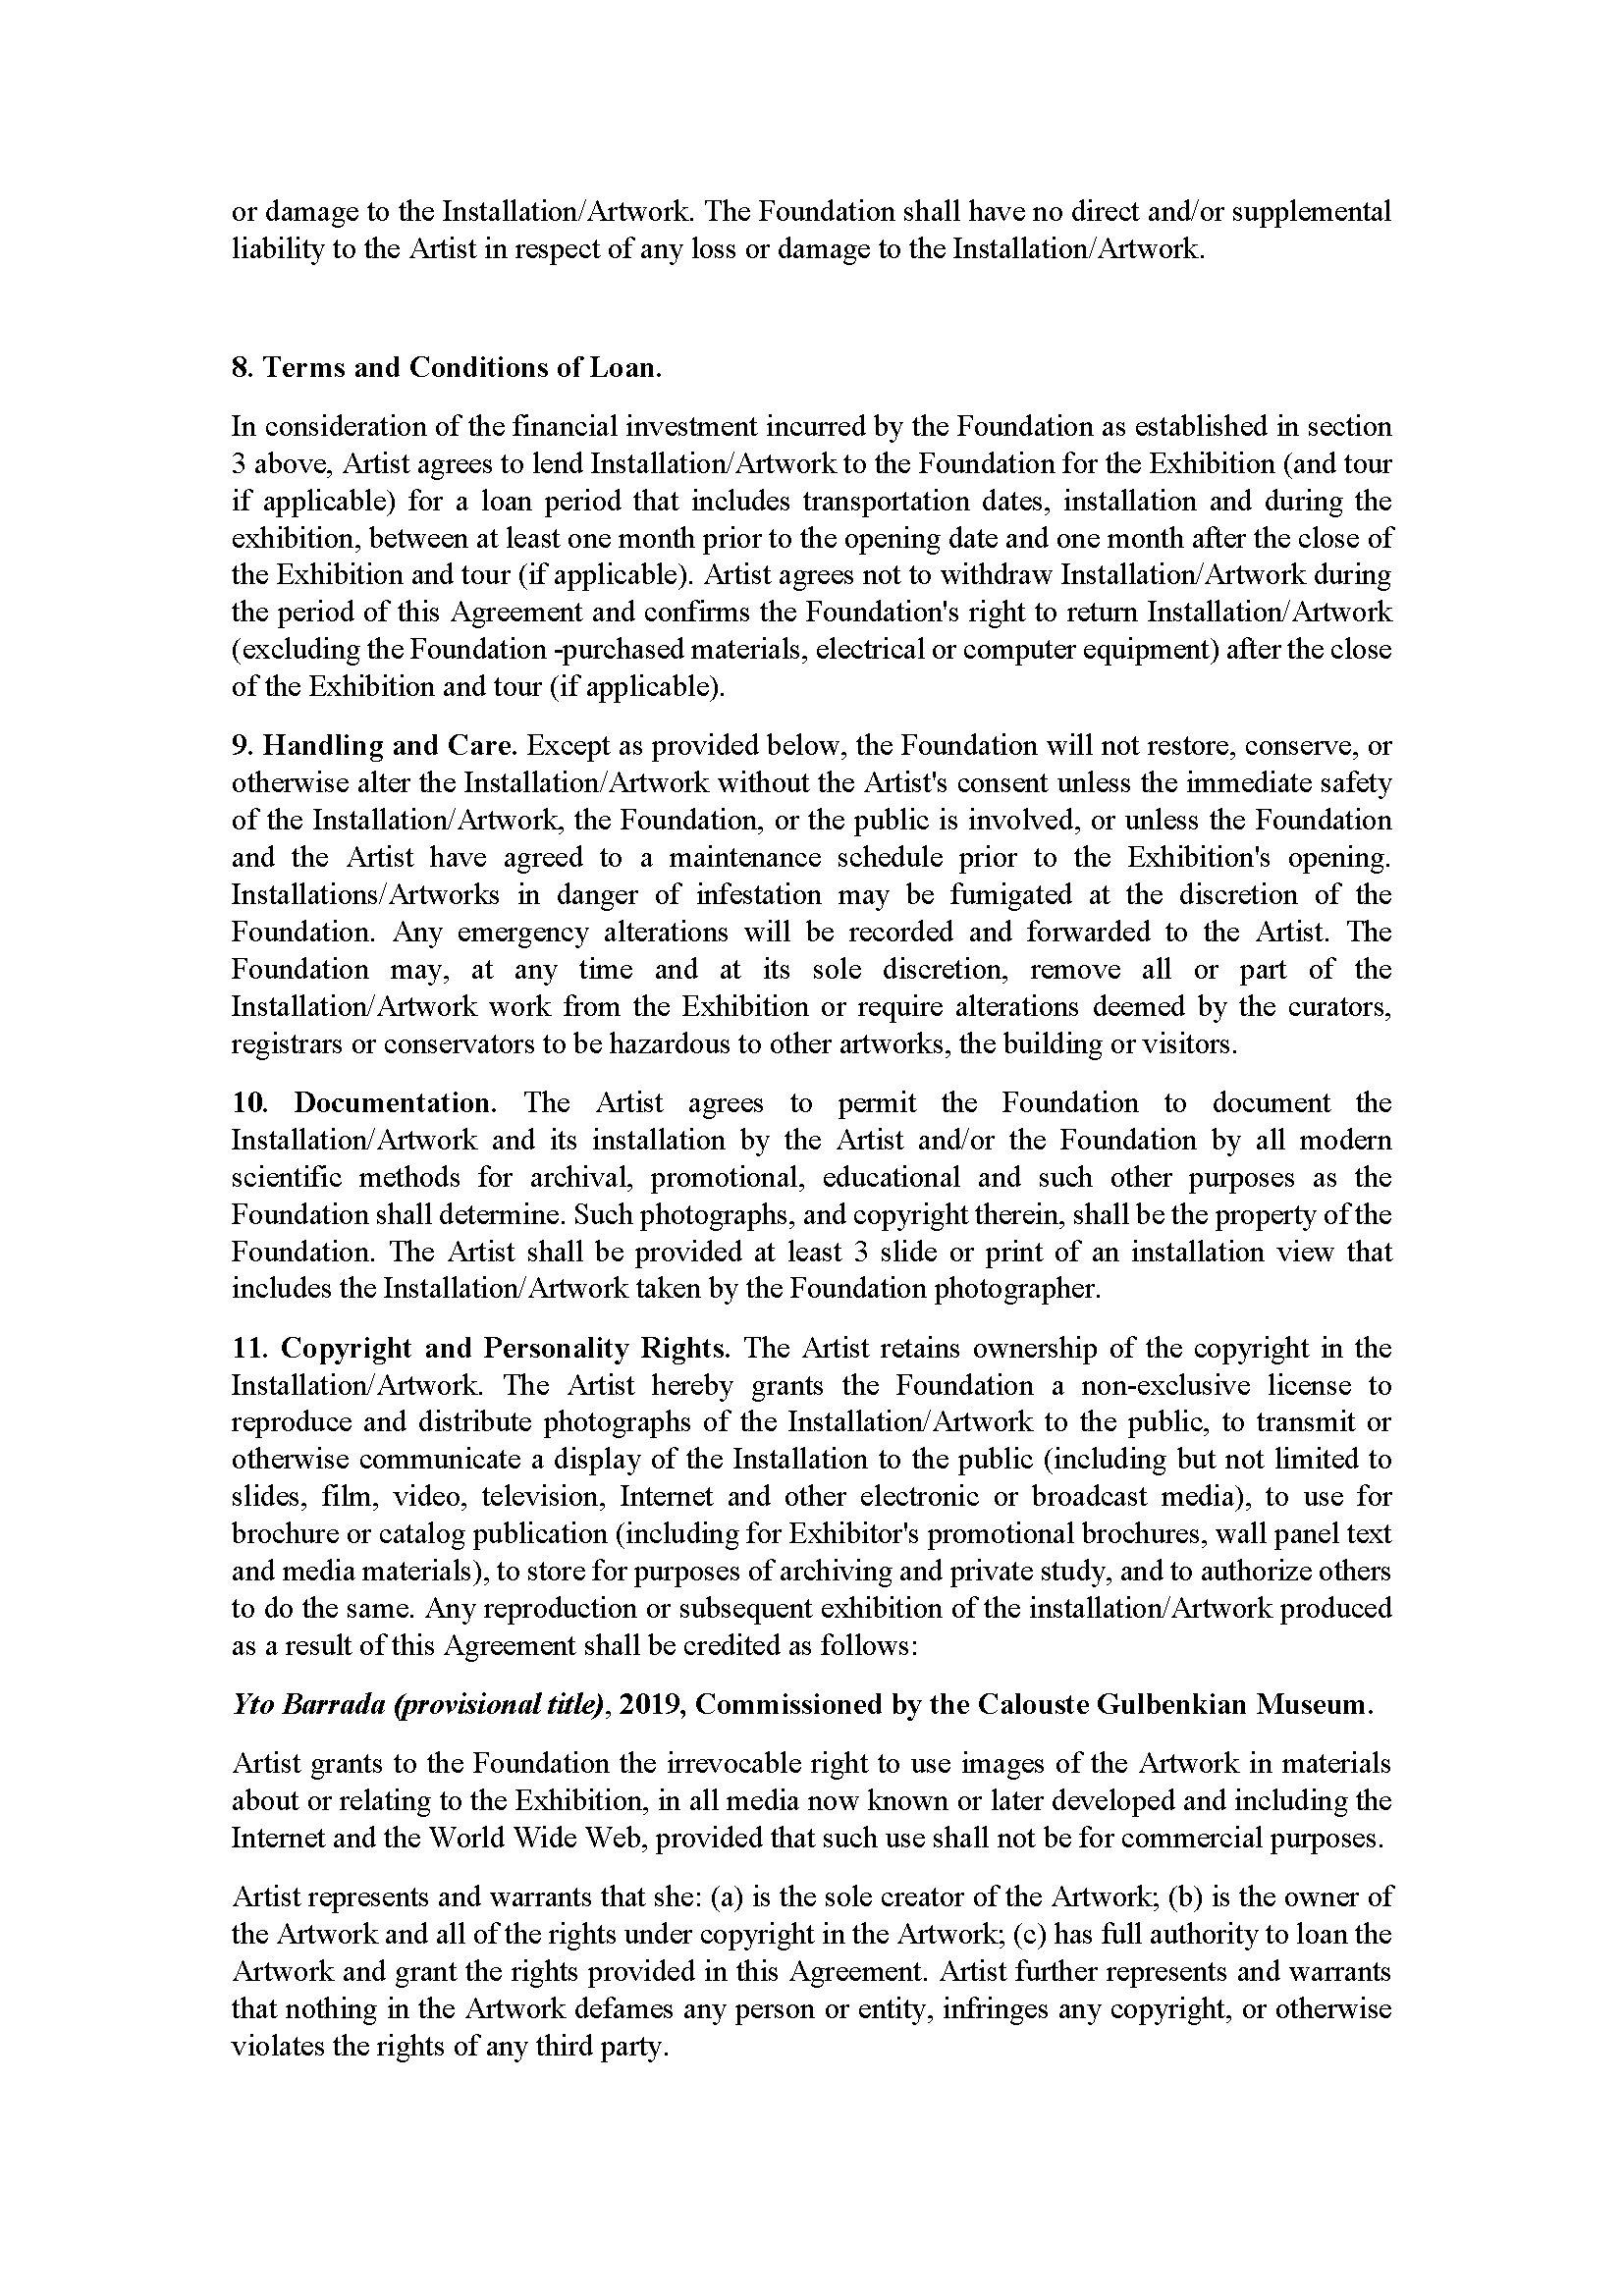 Declaracao_YtoBarrada_Agreement_Commissioned_Installation_1.3